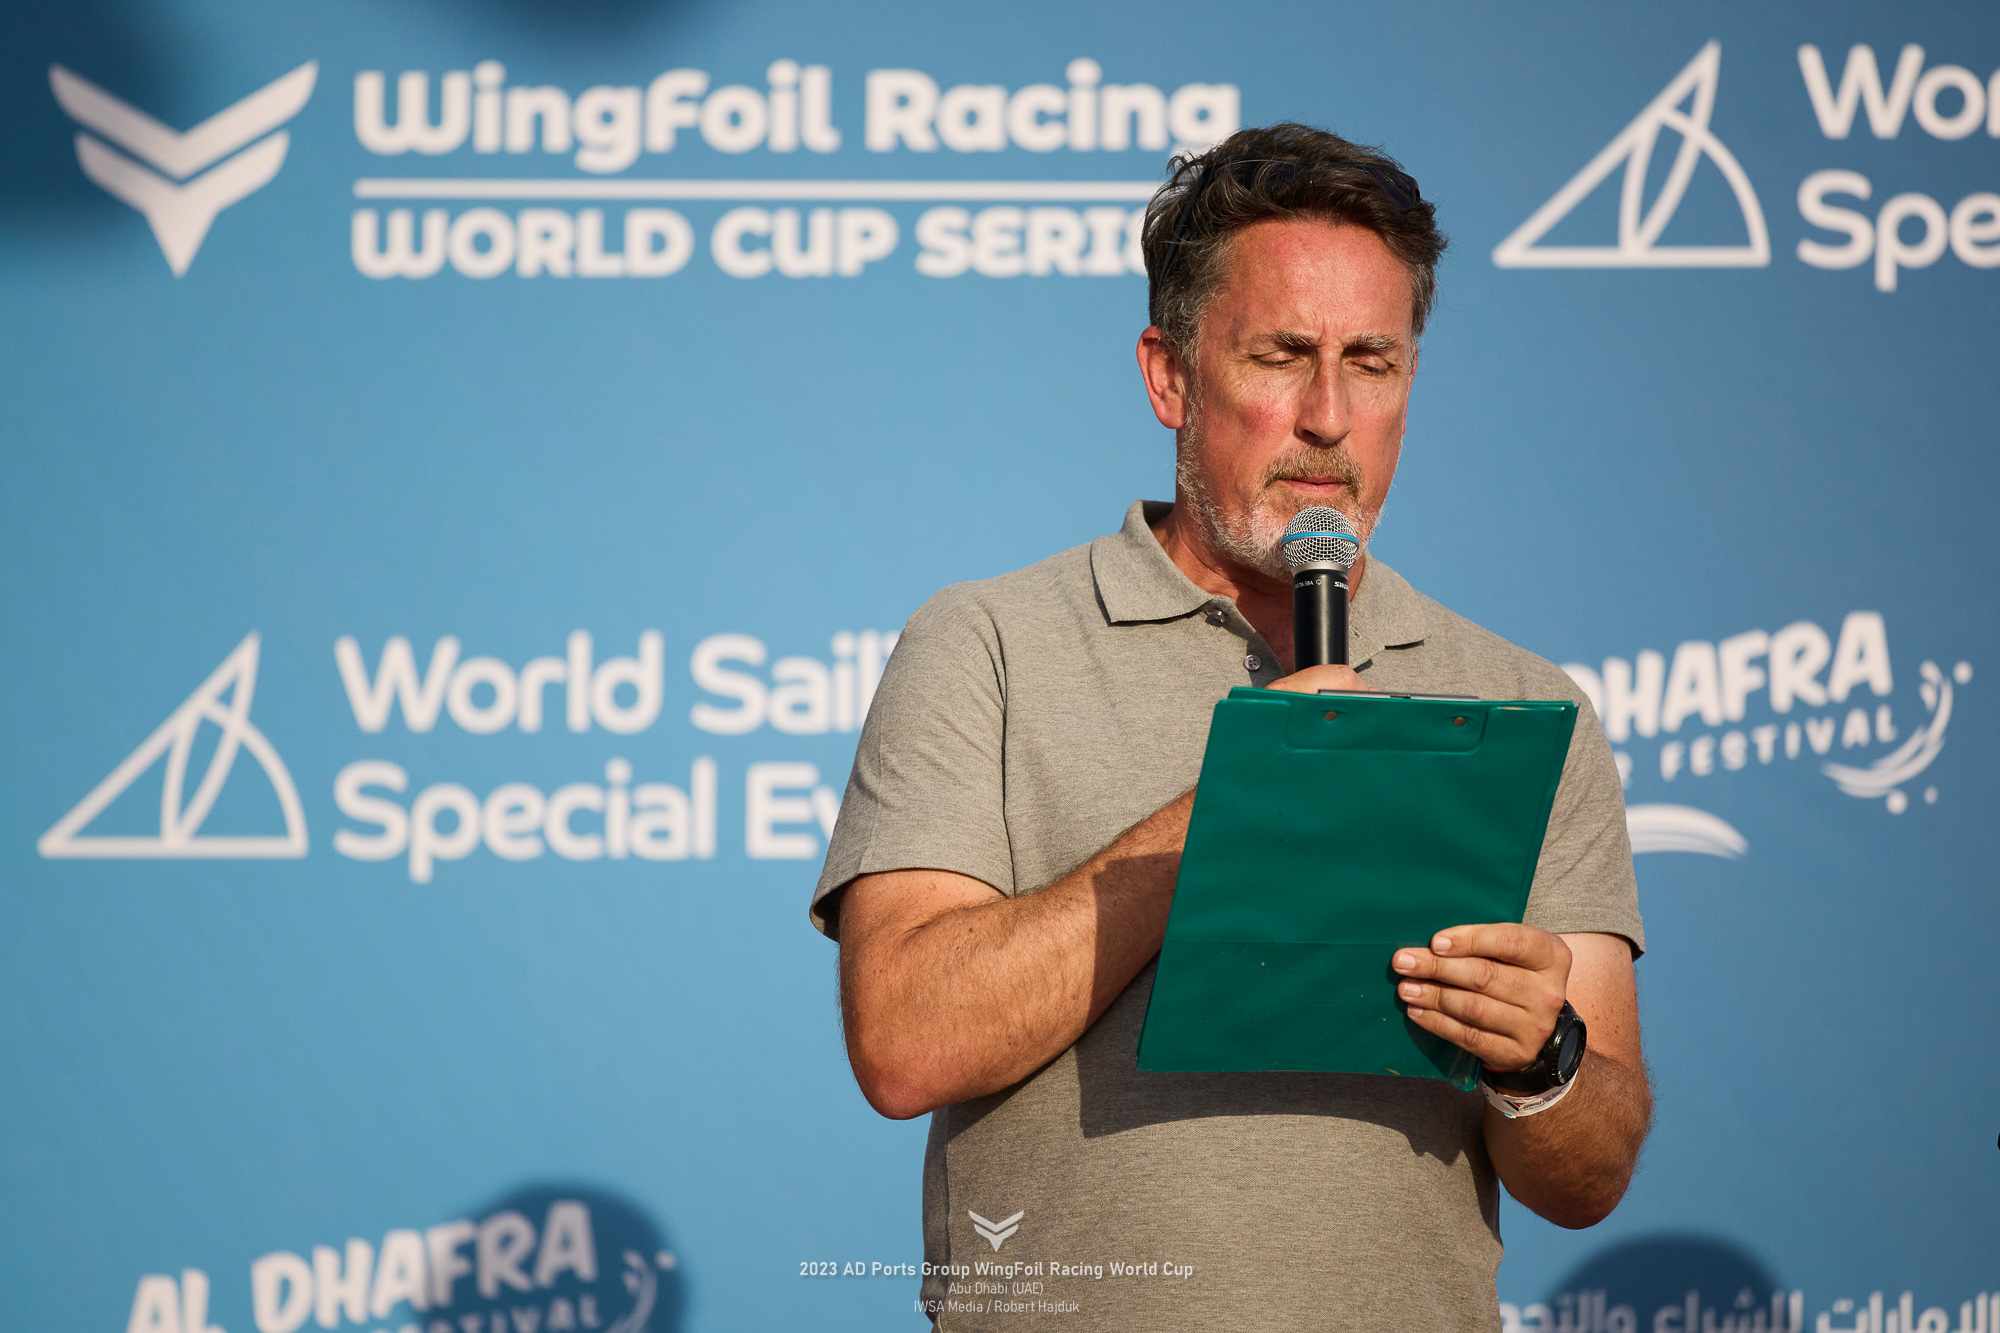 Internet_2023_03_19_AD_WingFoil_WC_D4_502_RH - 2023 WingFoil Racing World Cup Series Abu Dhabi